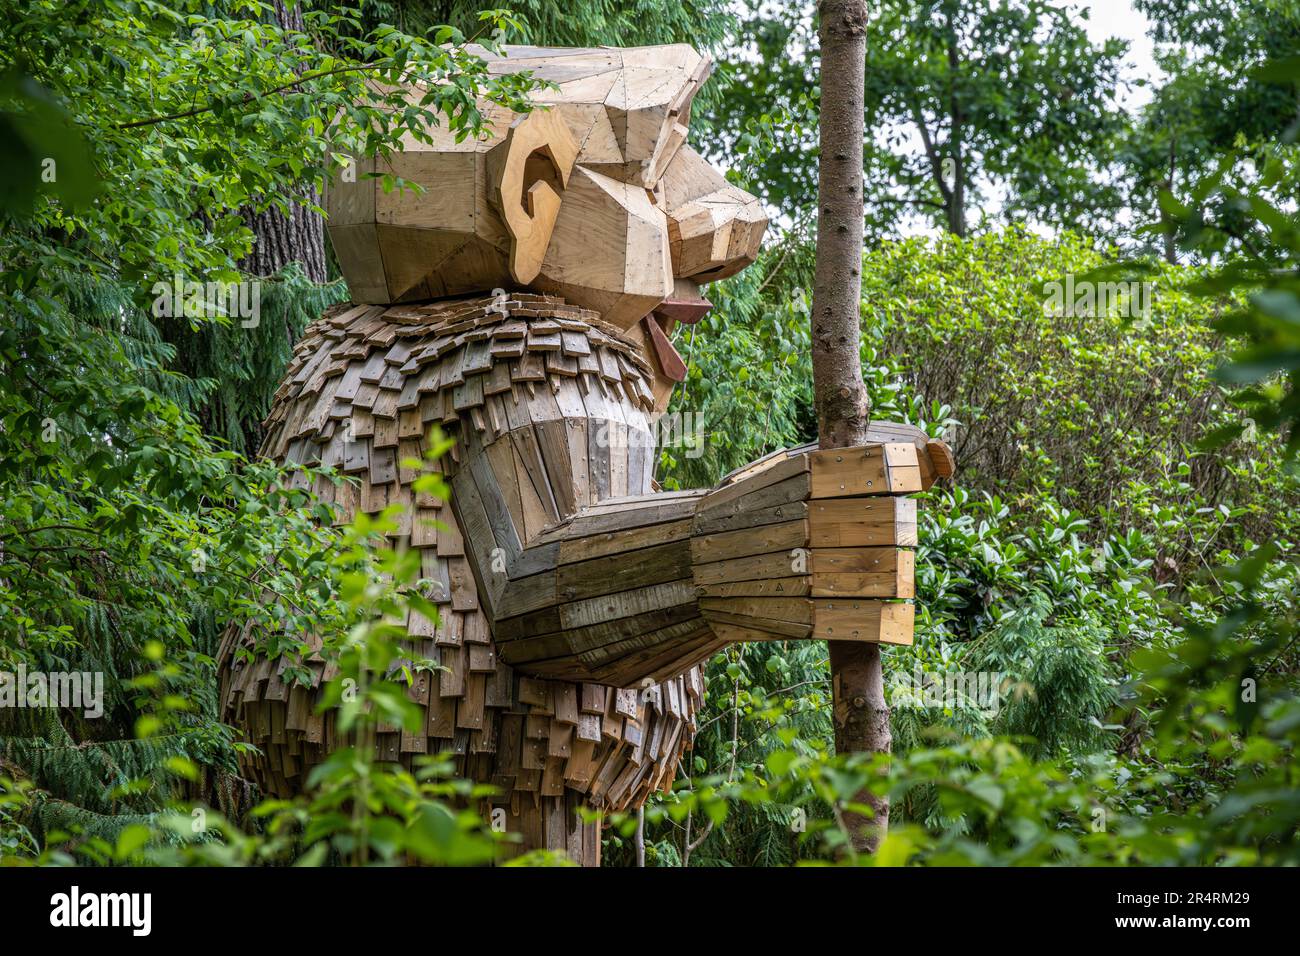 Ronja Redeye wooden sculpture by Thomas Dambo at the Atlanta Botanical Garden in Atlanta, Georgia. (USA) Stock Photo